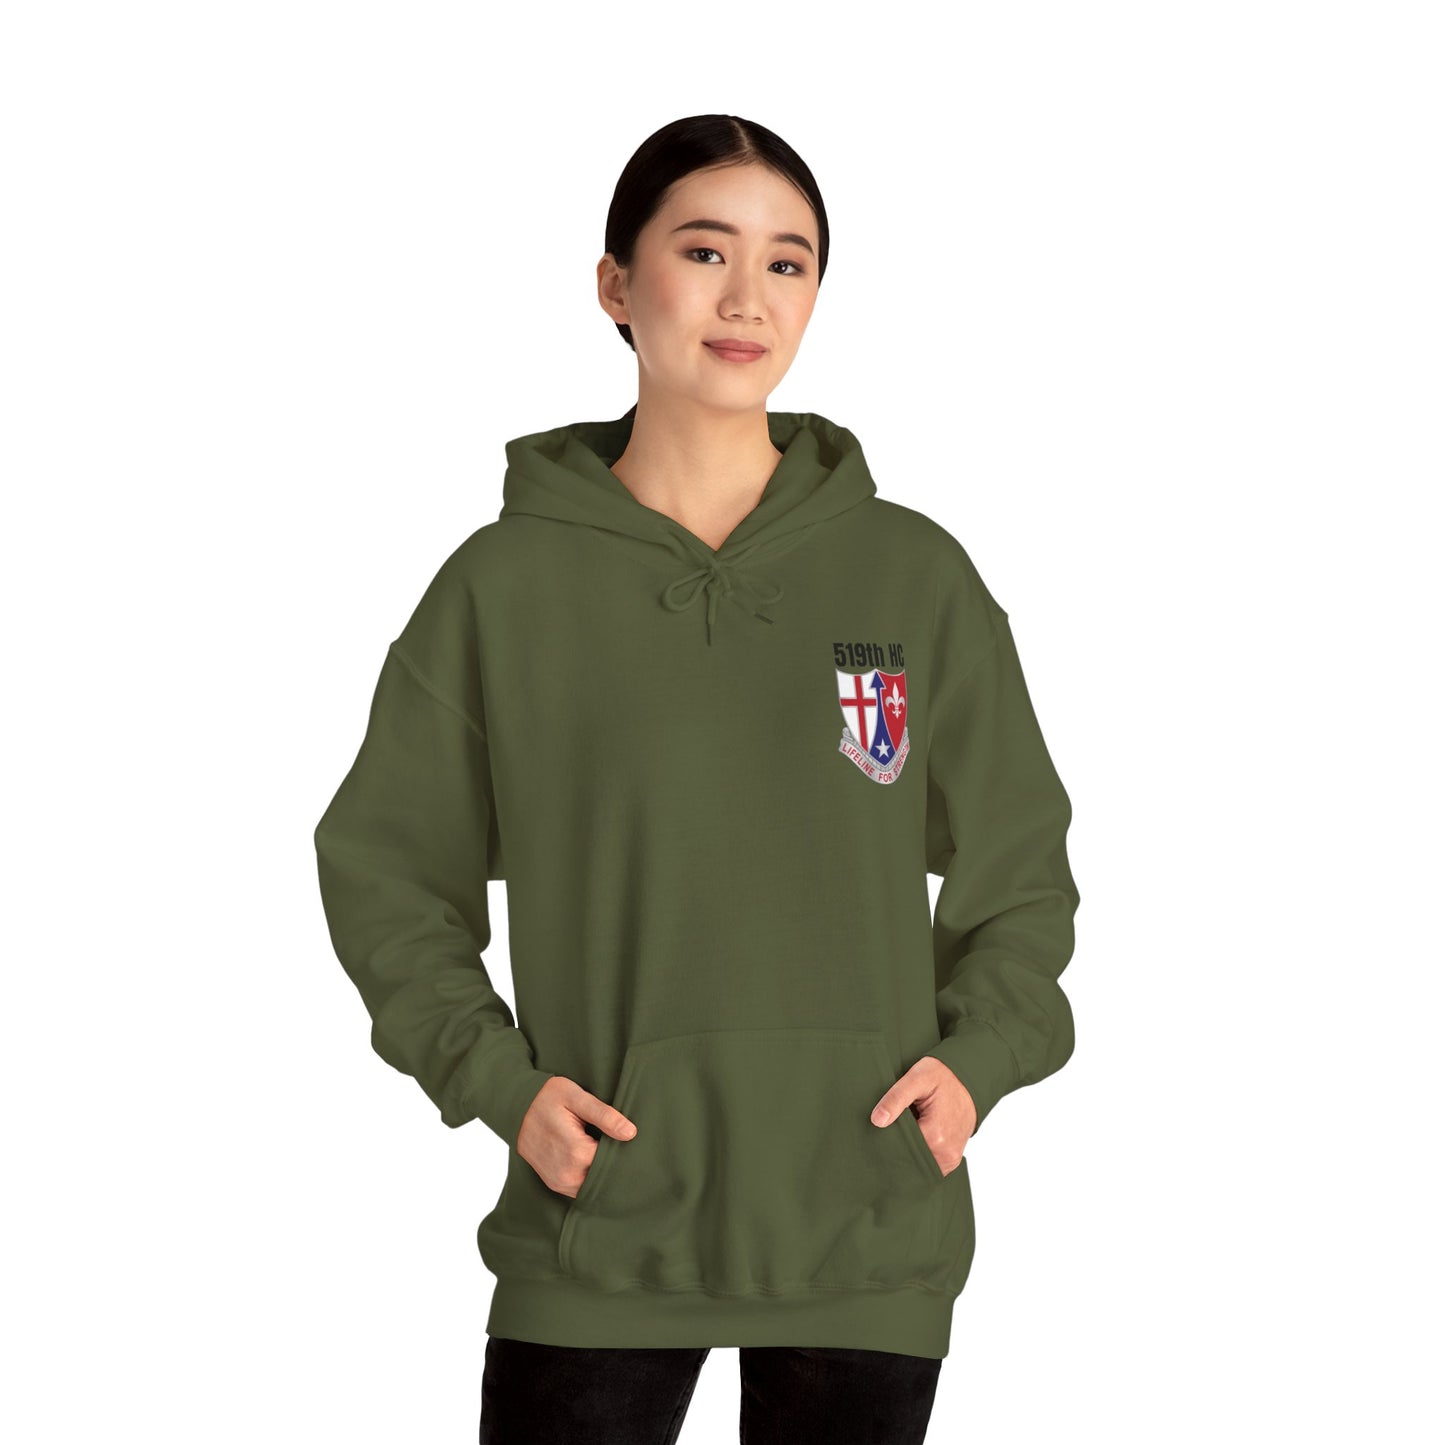 519TH HC - Unisex Heavy Blend™ Hooded Sweatshirt - Printed in USA